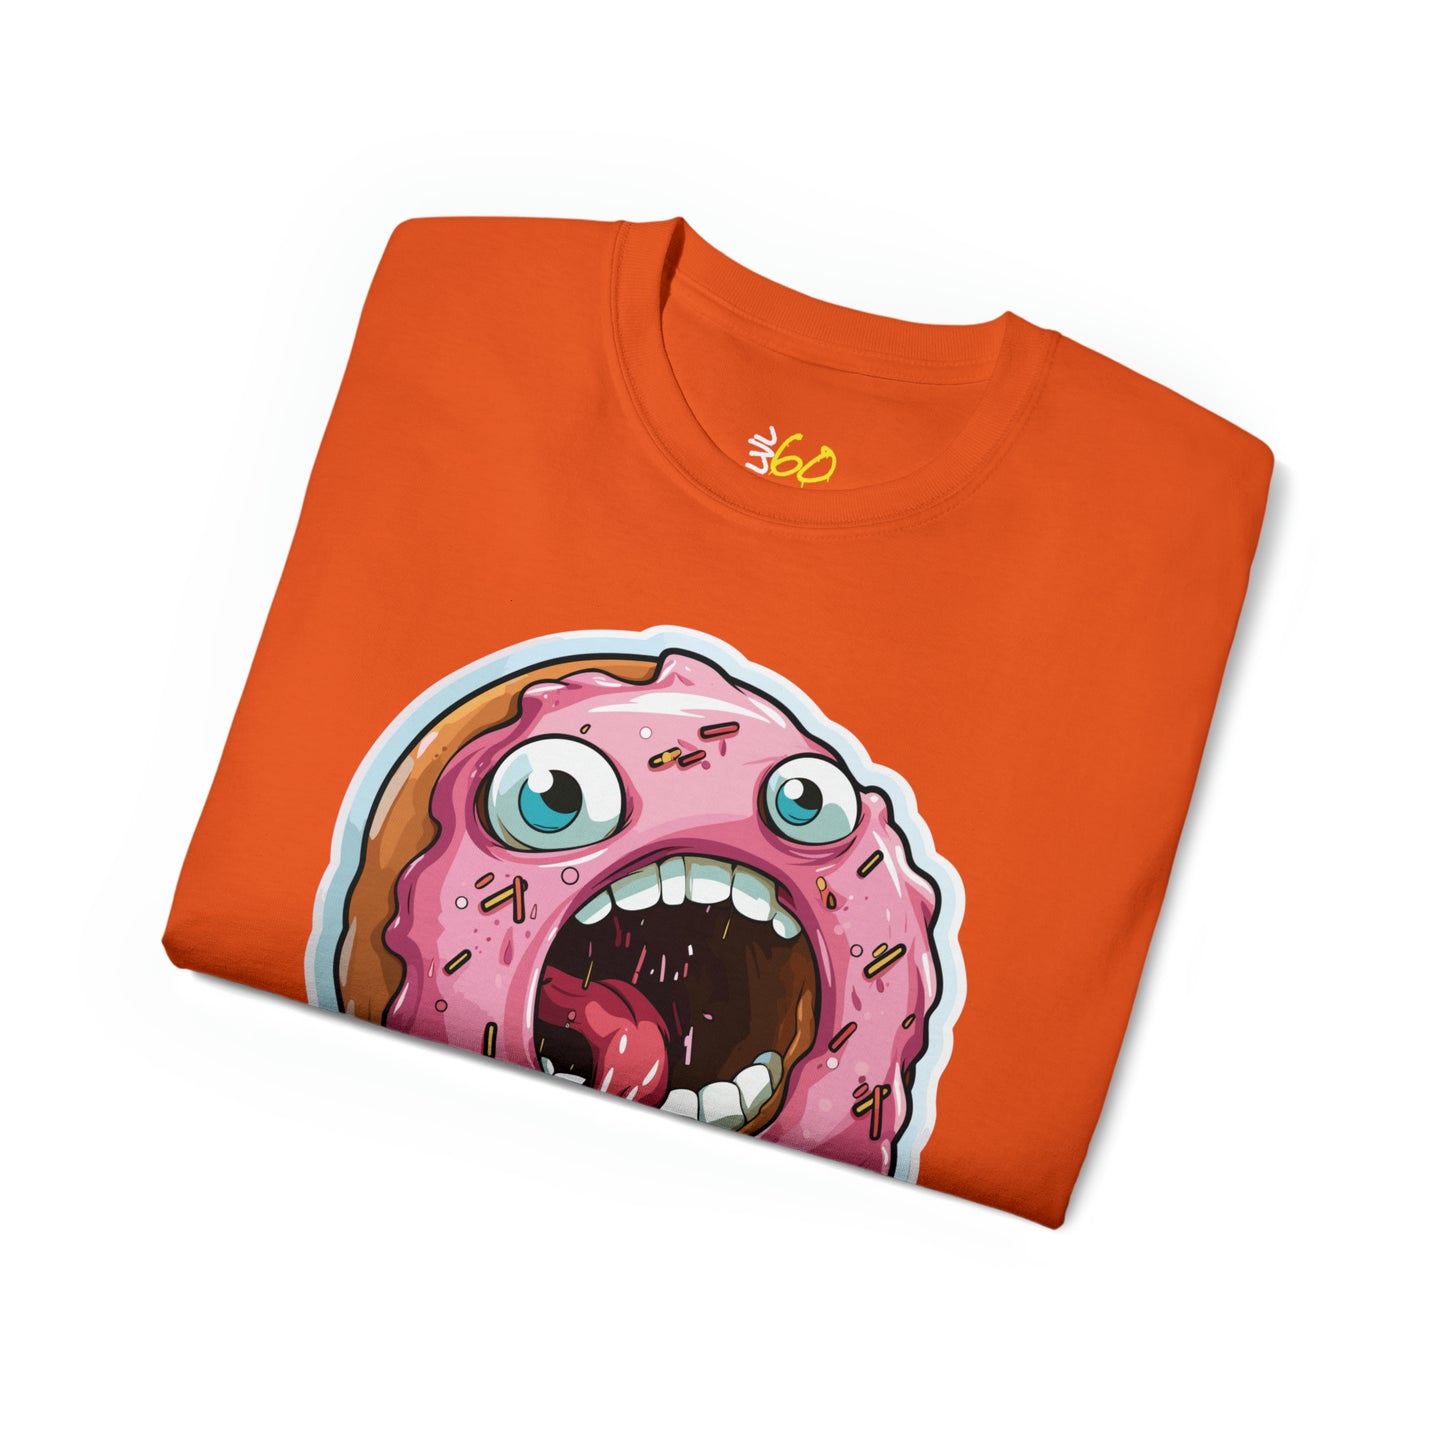 Graphic Tee: Cursed Donut